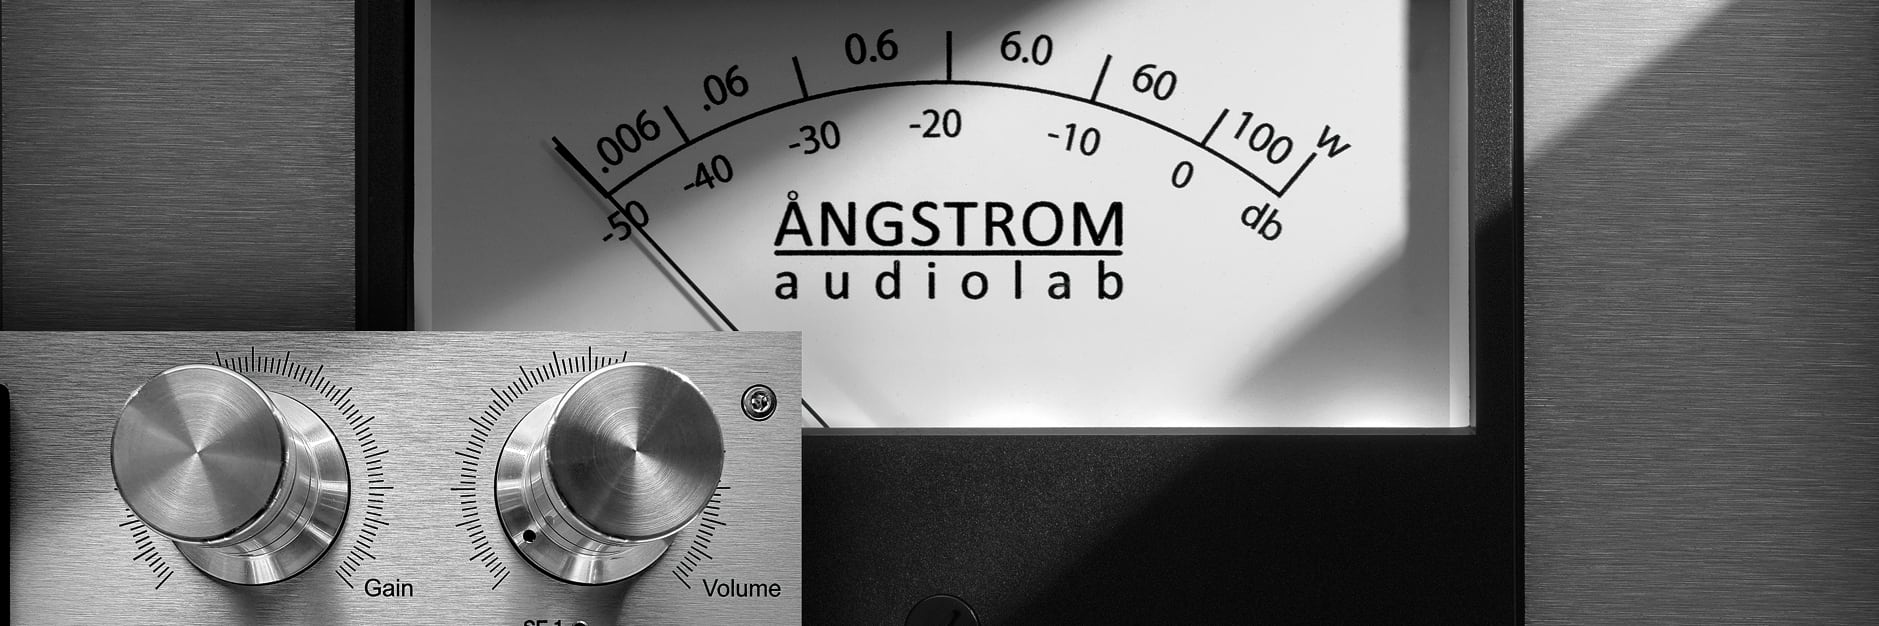 Ångstrom Audiolab ZIA100